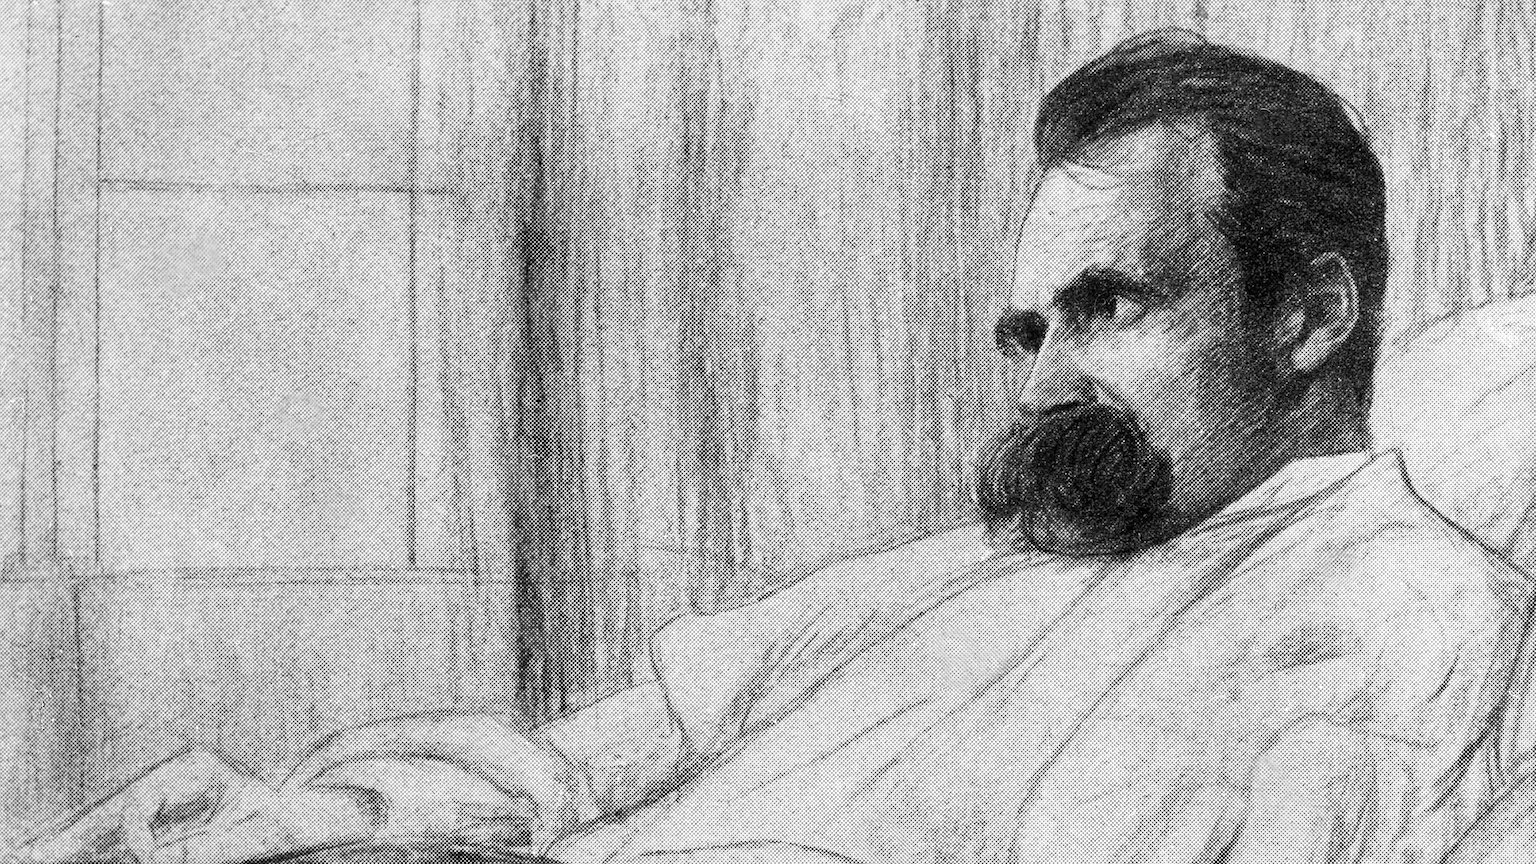 Friedrich Nietzsche: the most controversial philosopher ever